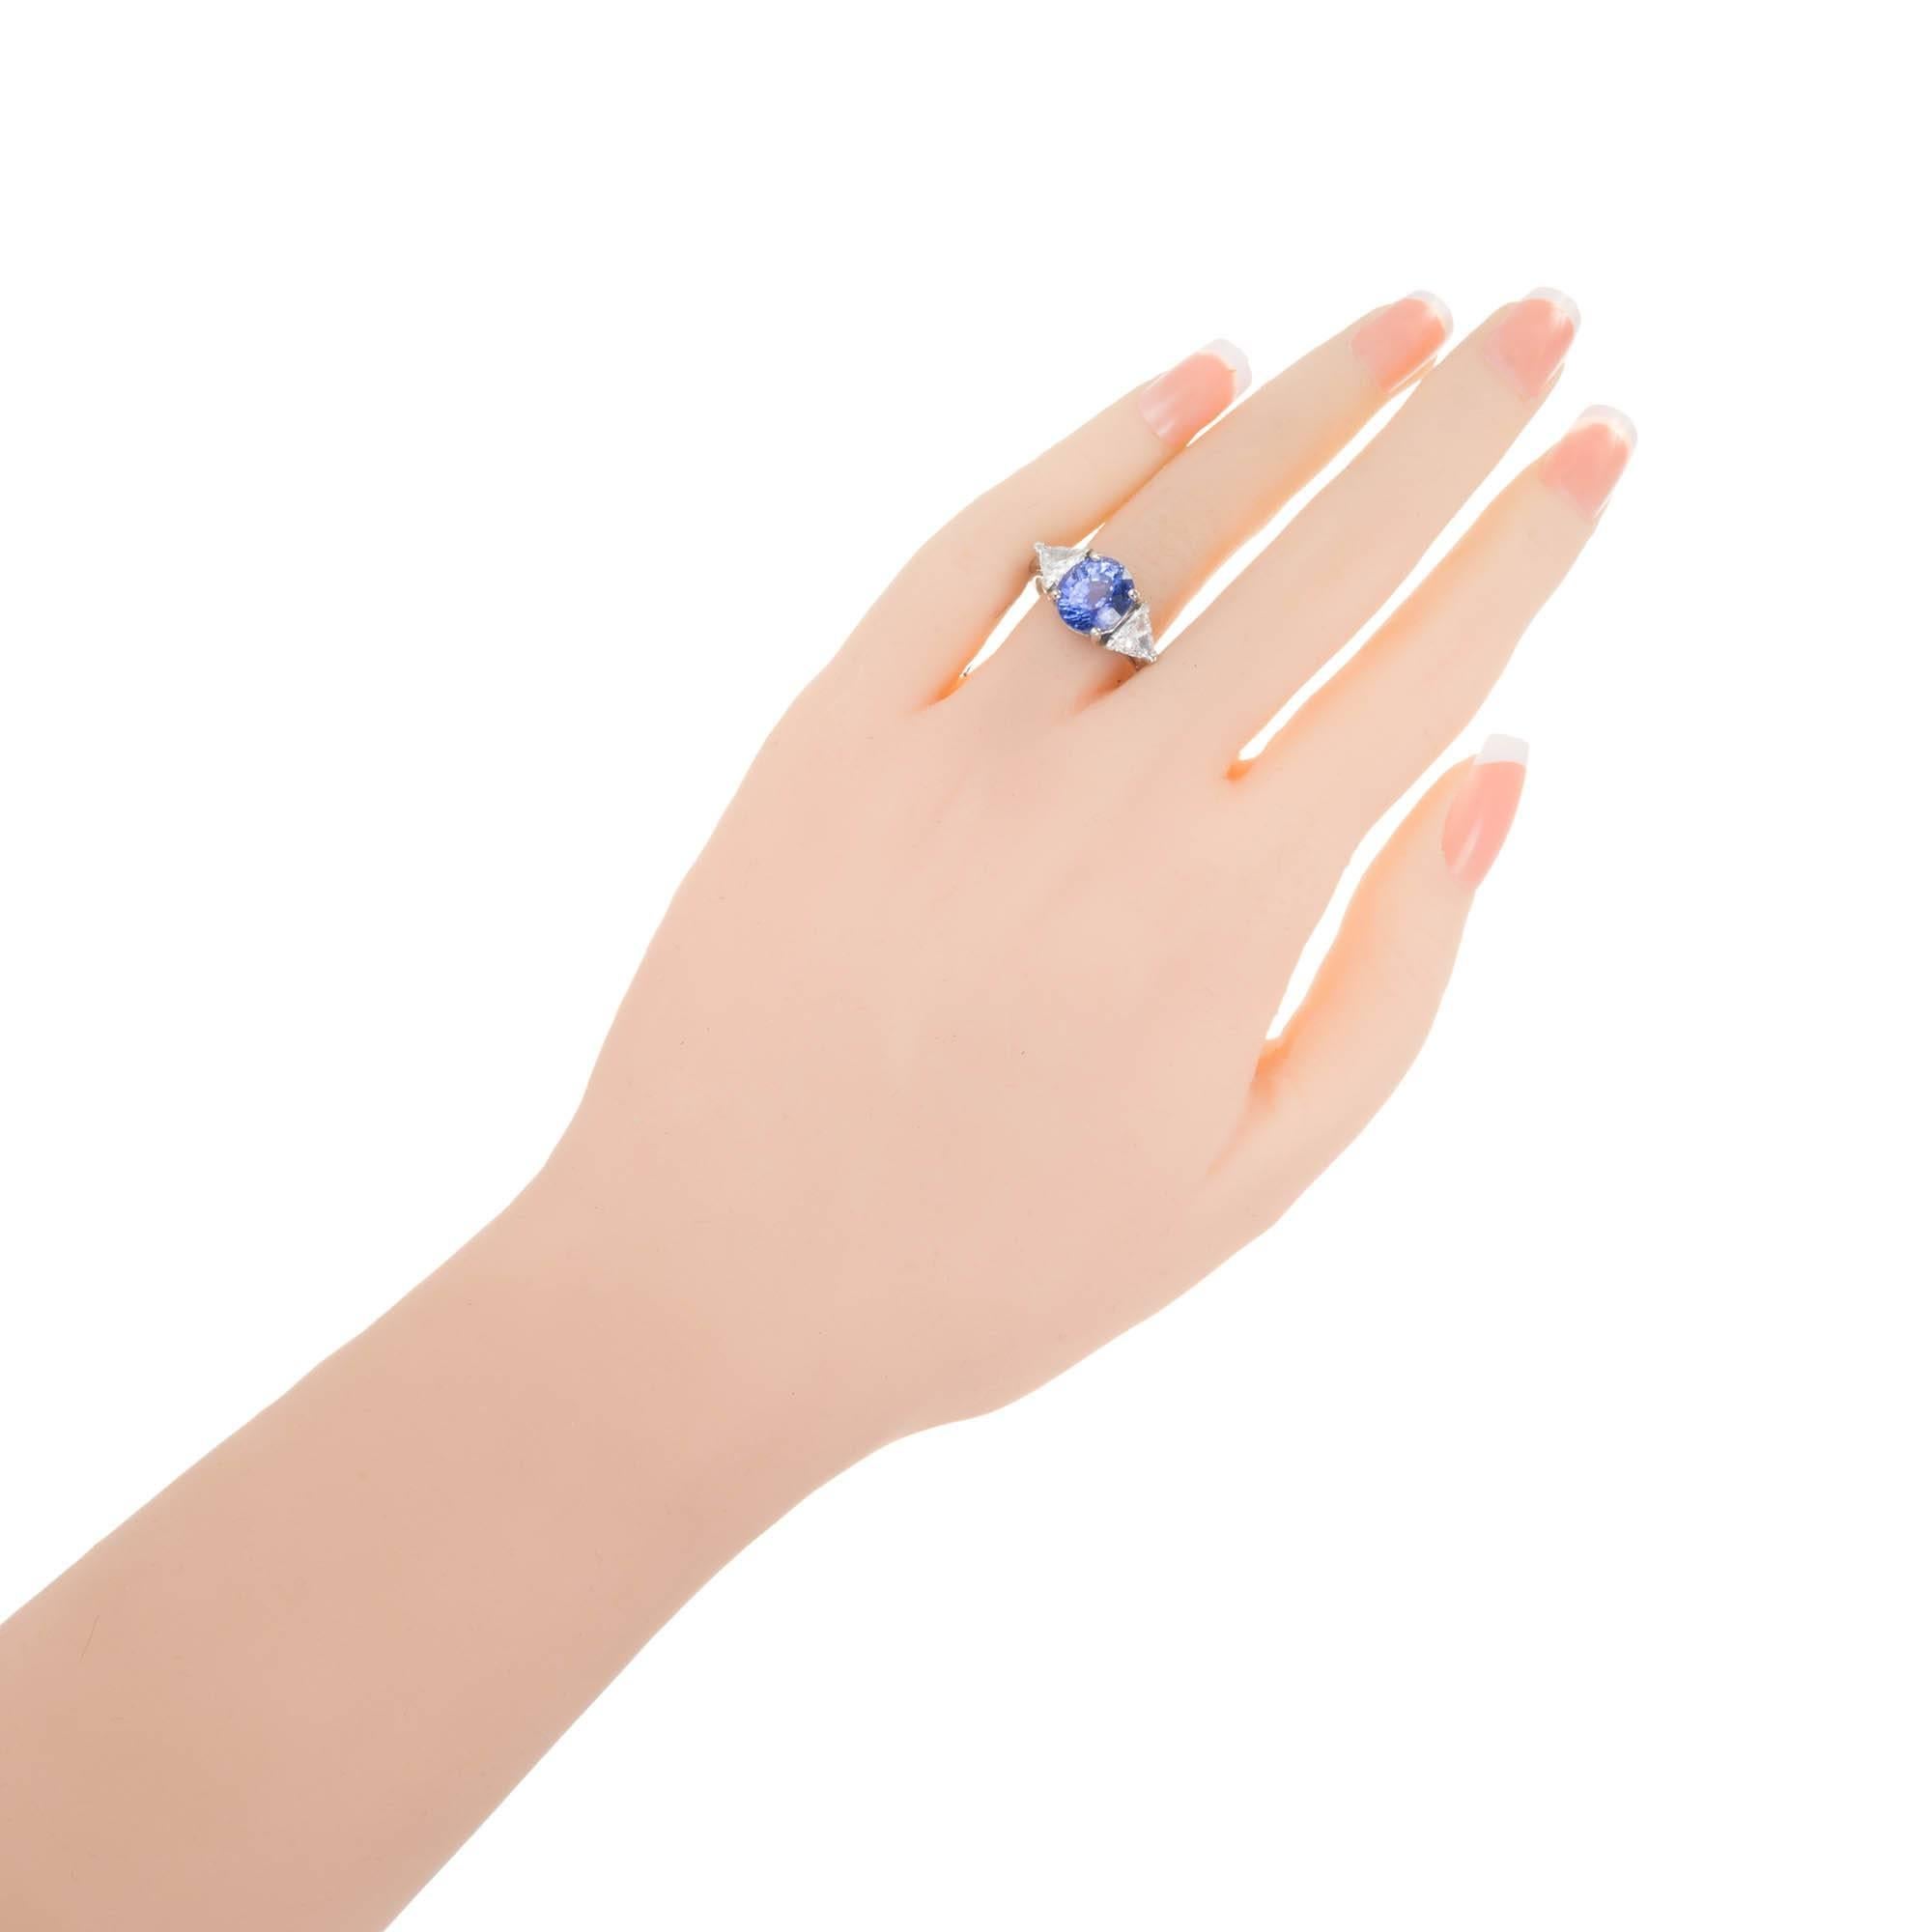 Oval Cut AGL Certified 5.17 Carat Natural Sapphire Diamond Platinum Engagement Ring